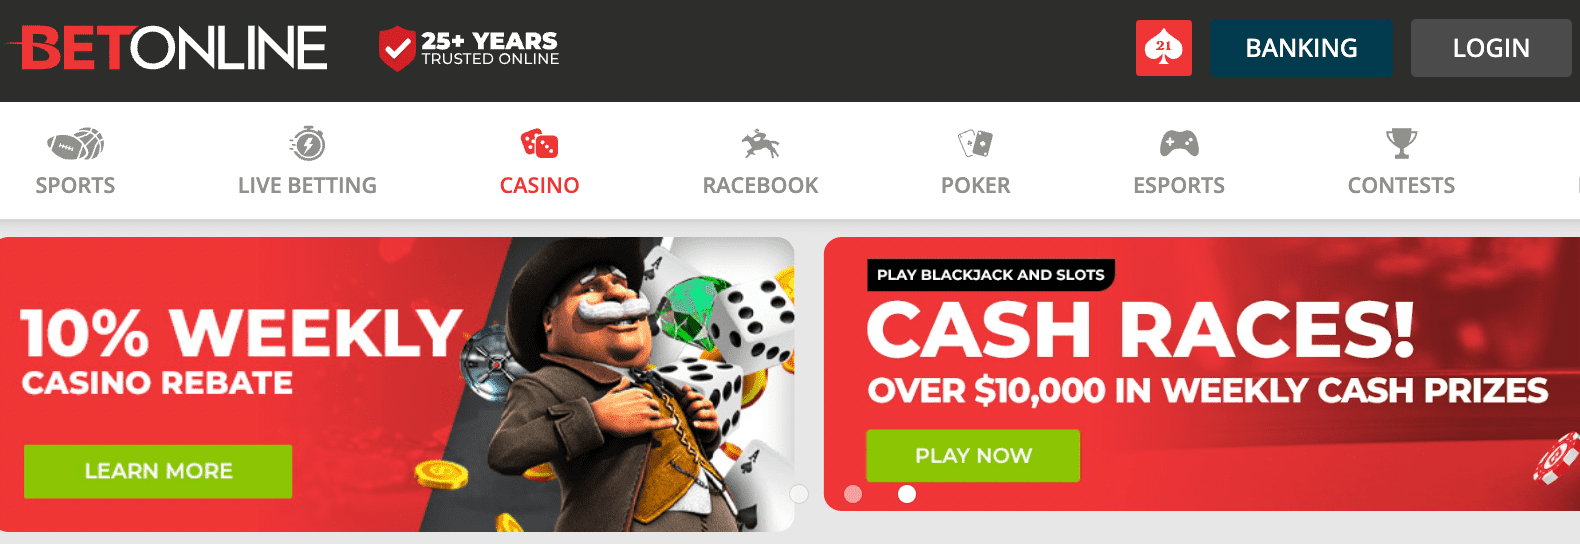 online casino BetOnline